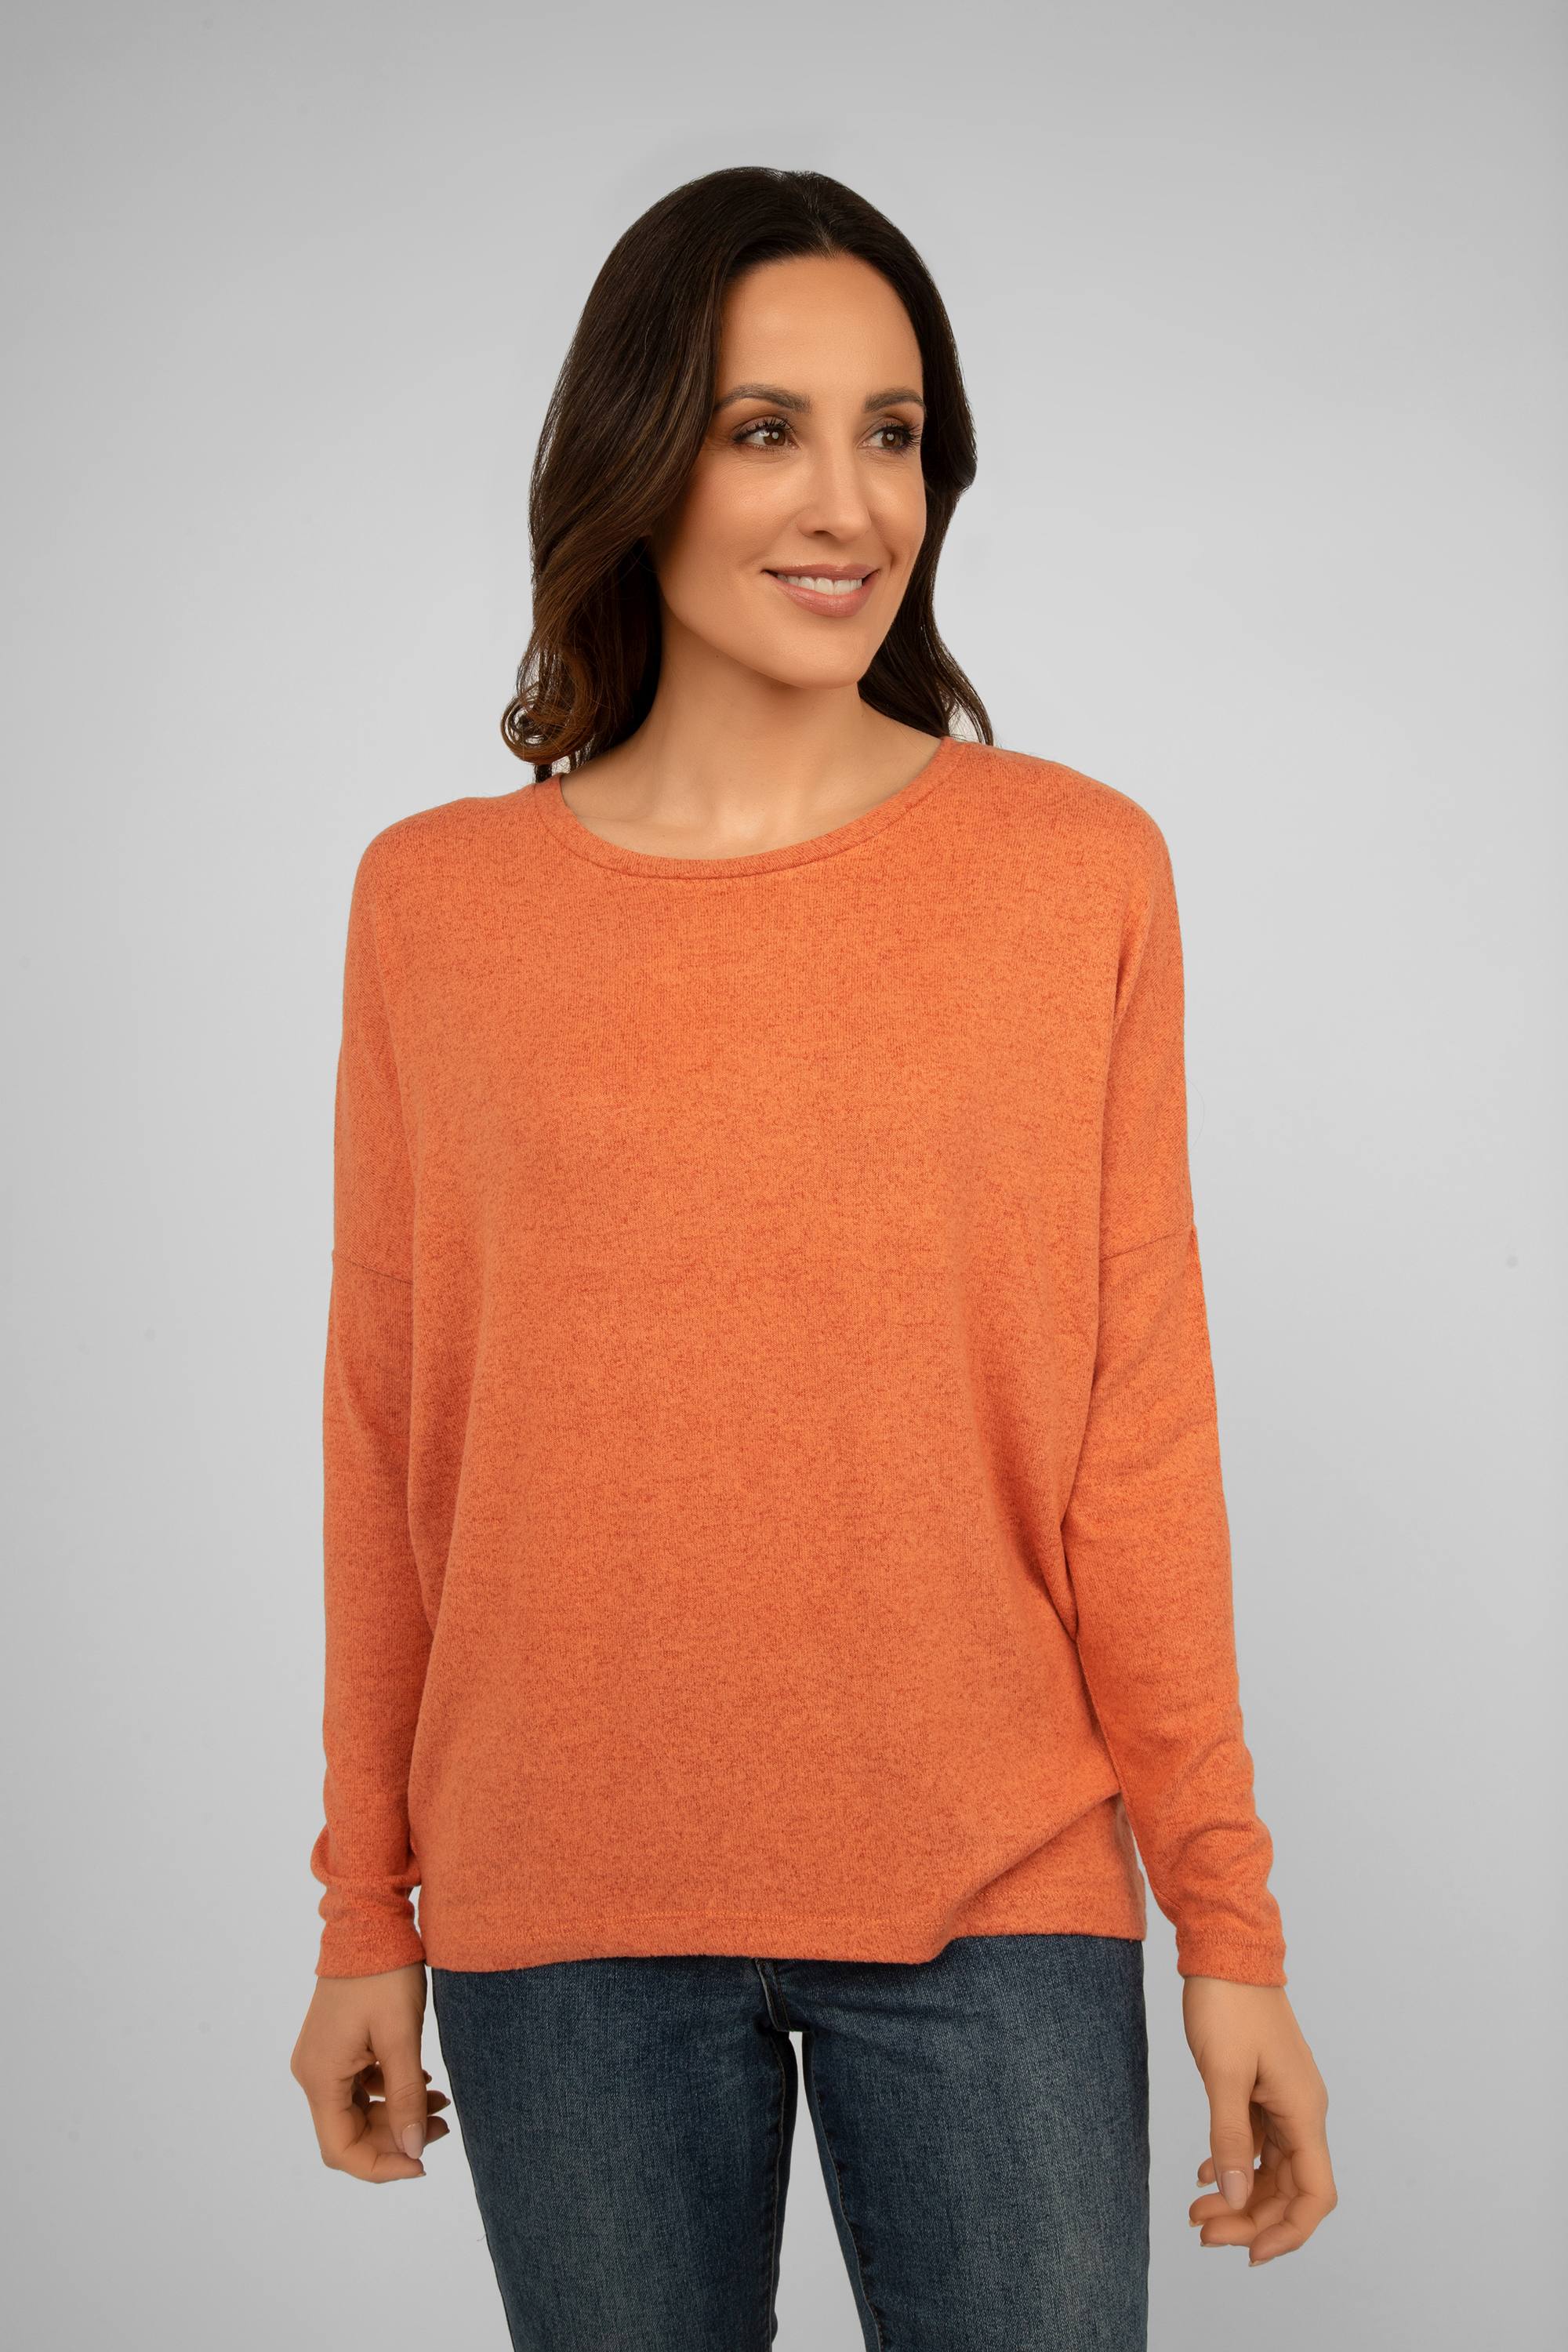 Soya Concept (24788S4) Women's Long Sleeve Brushed Knit Top in Dusty Clay Orange